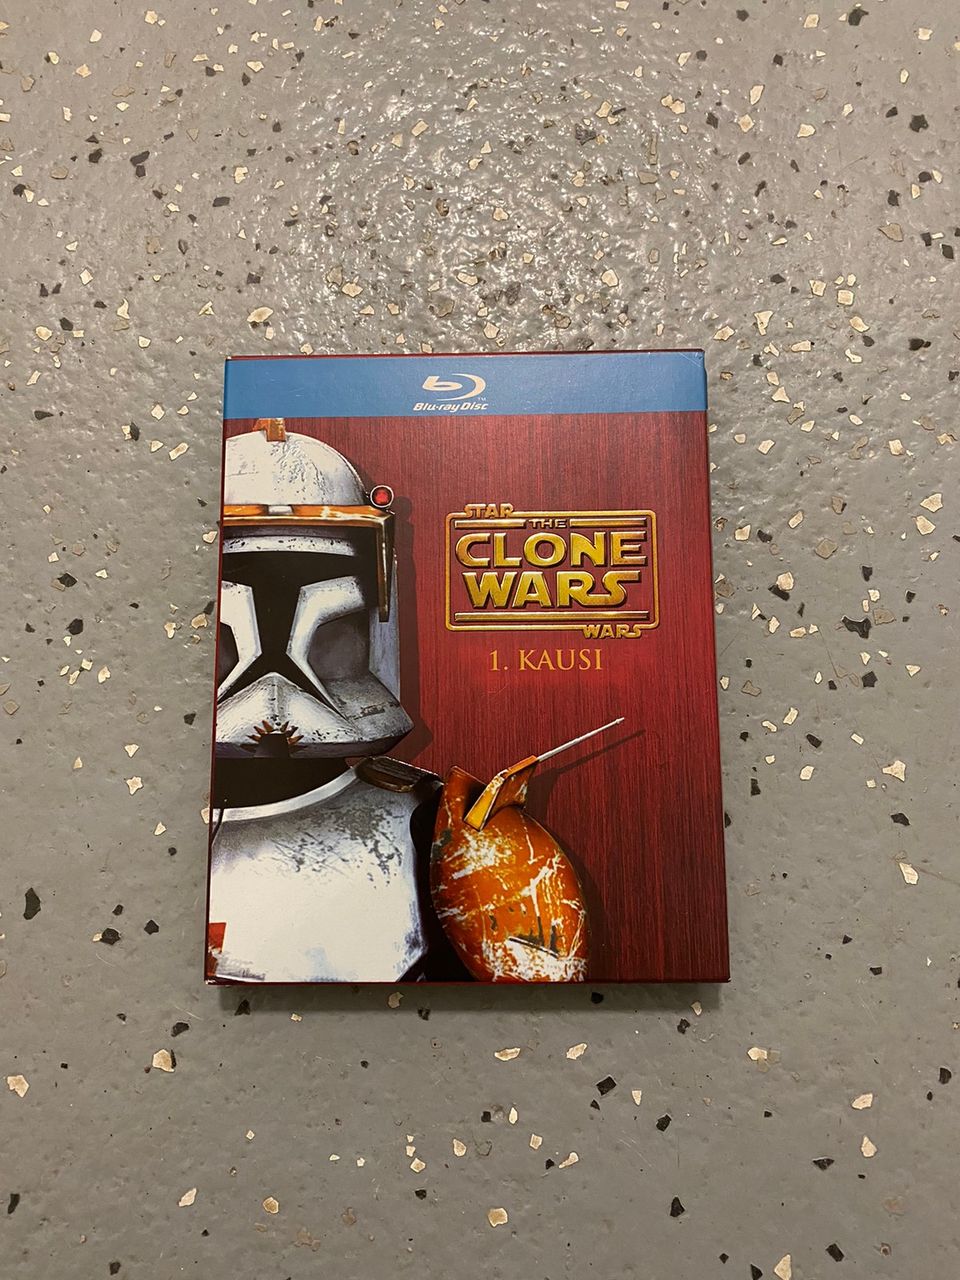 Clone Wars season 1 blu ray